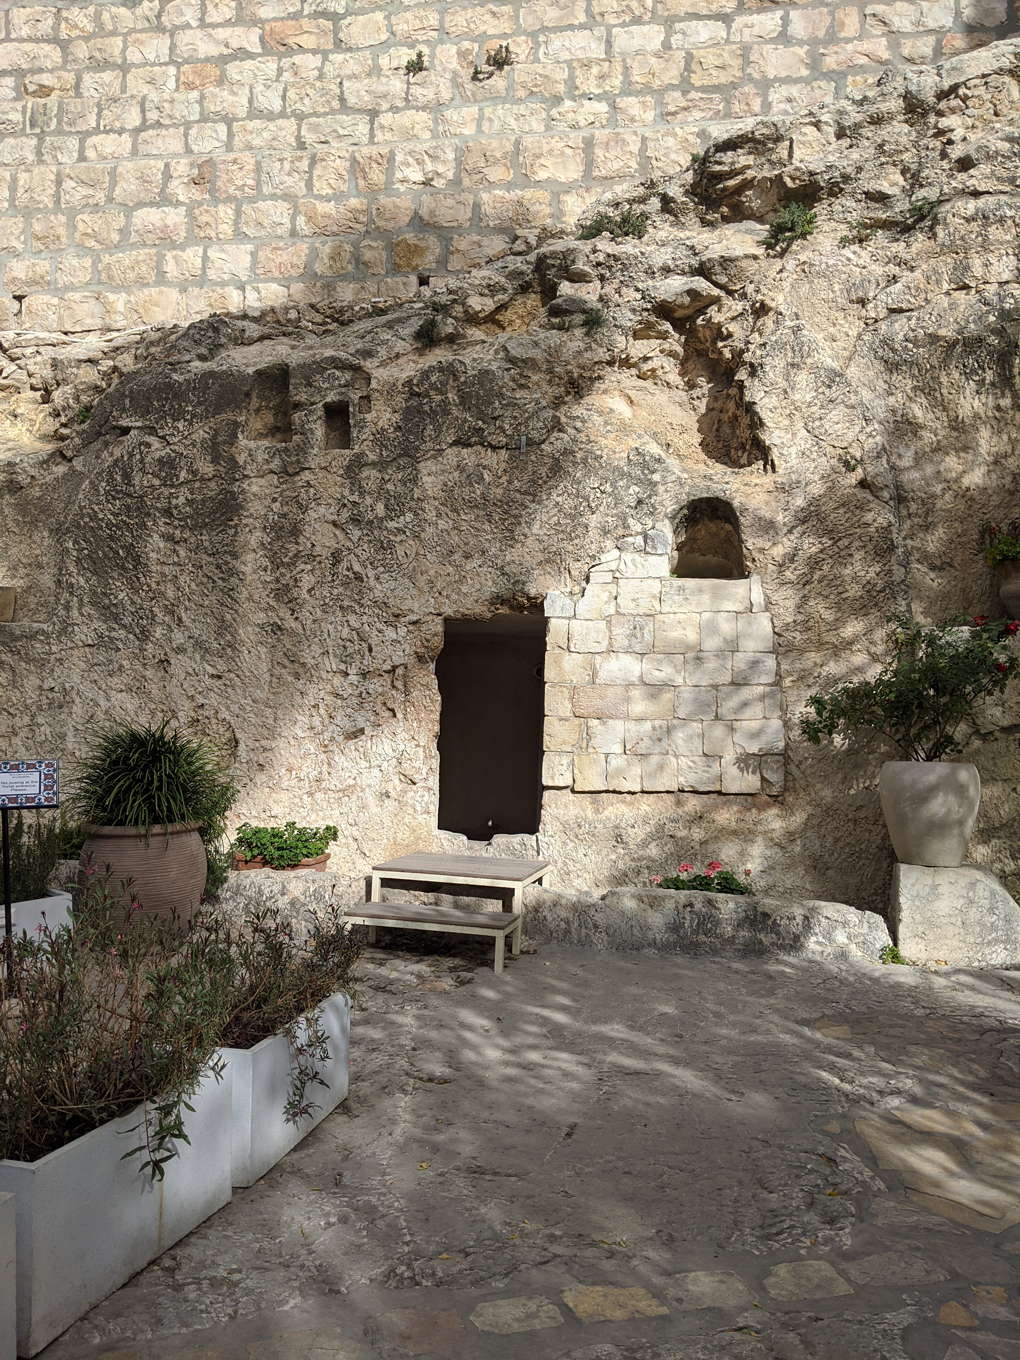 The empty garden tomb in Jerusalem